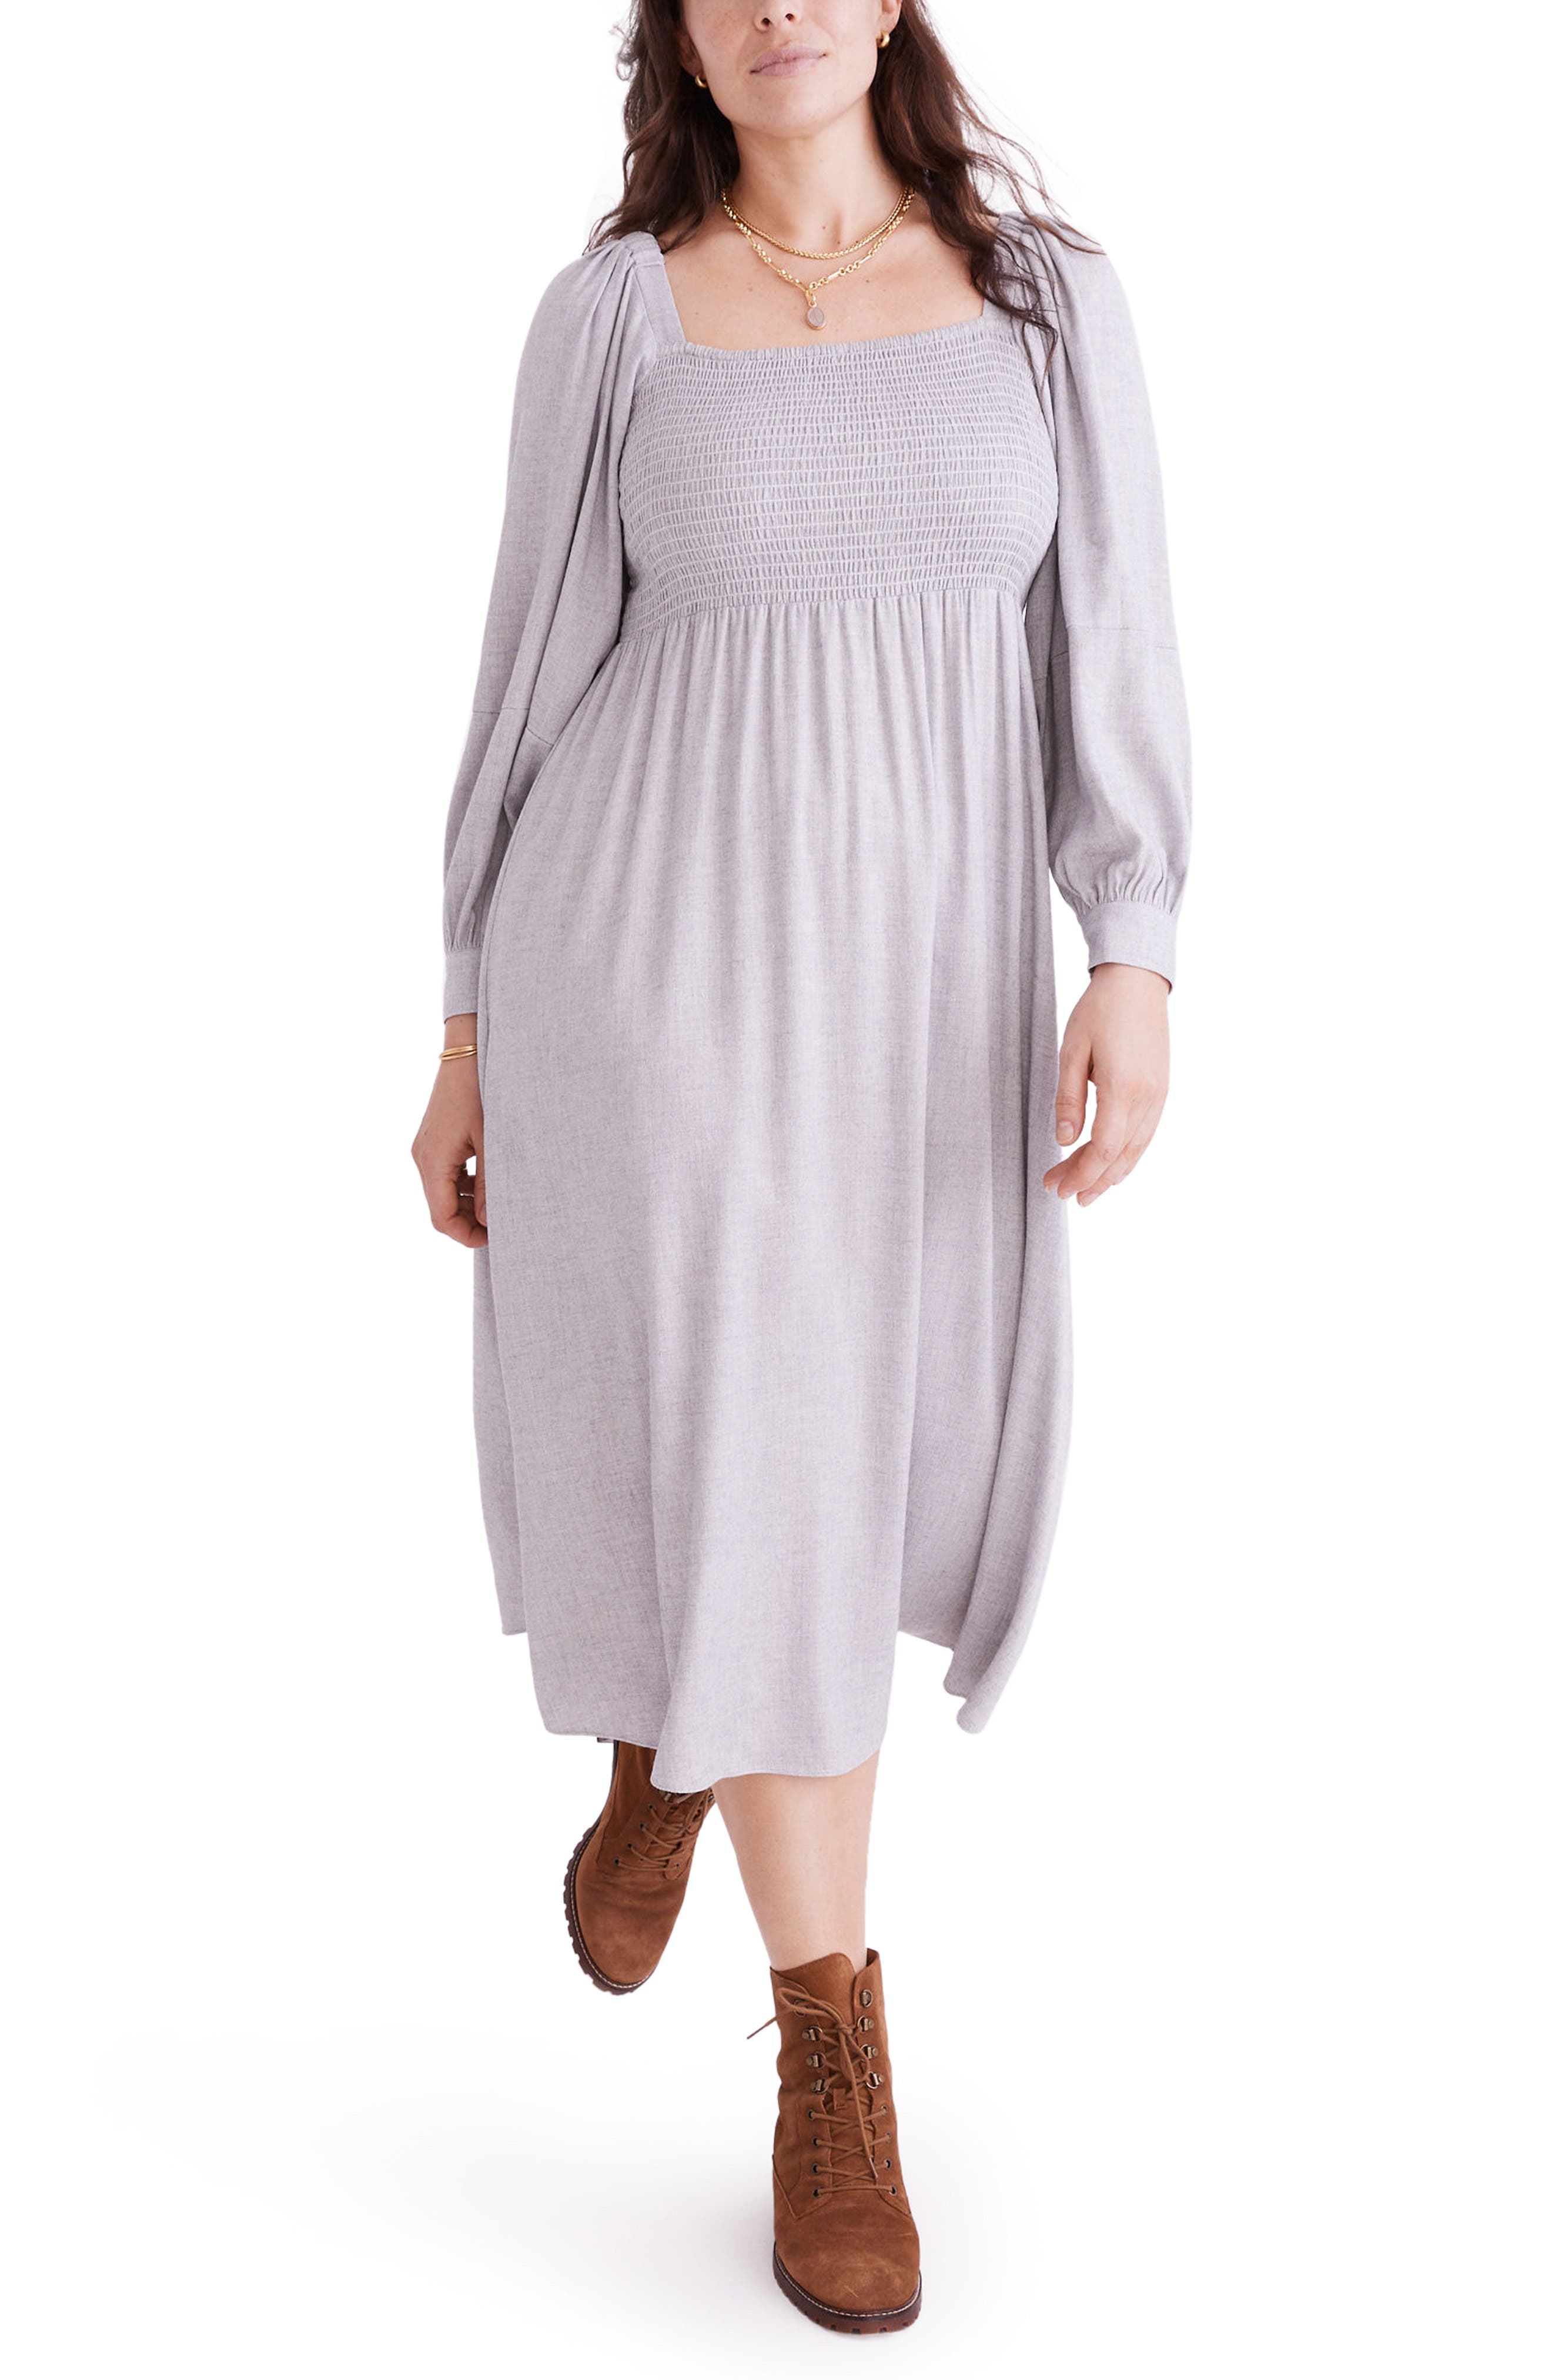 NEW Madewell Sweater Dress Womens Size Large Black White Stripe Long Sleeve 